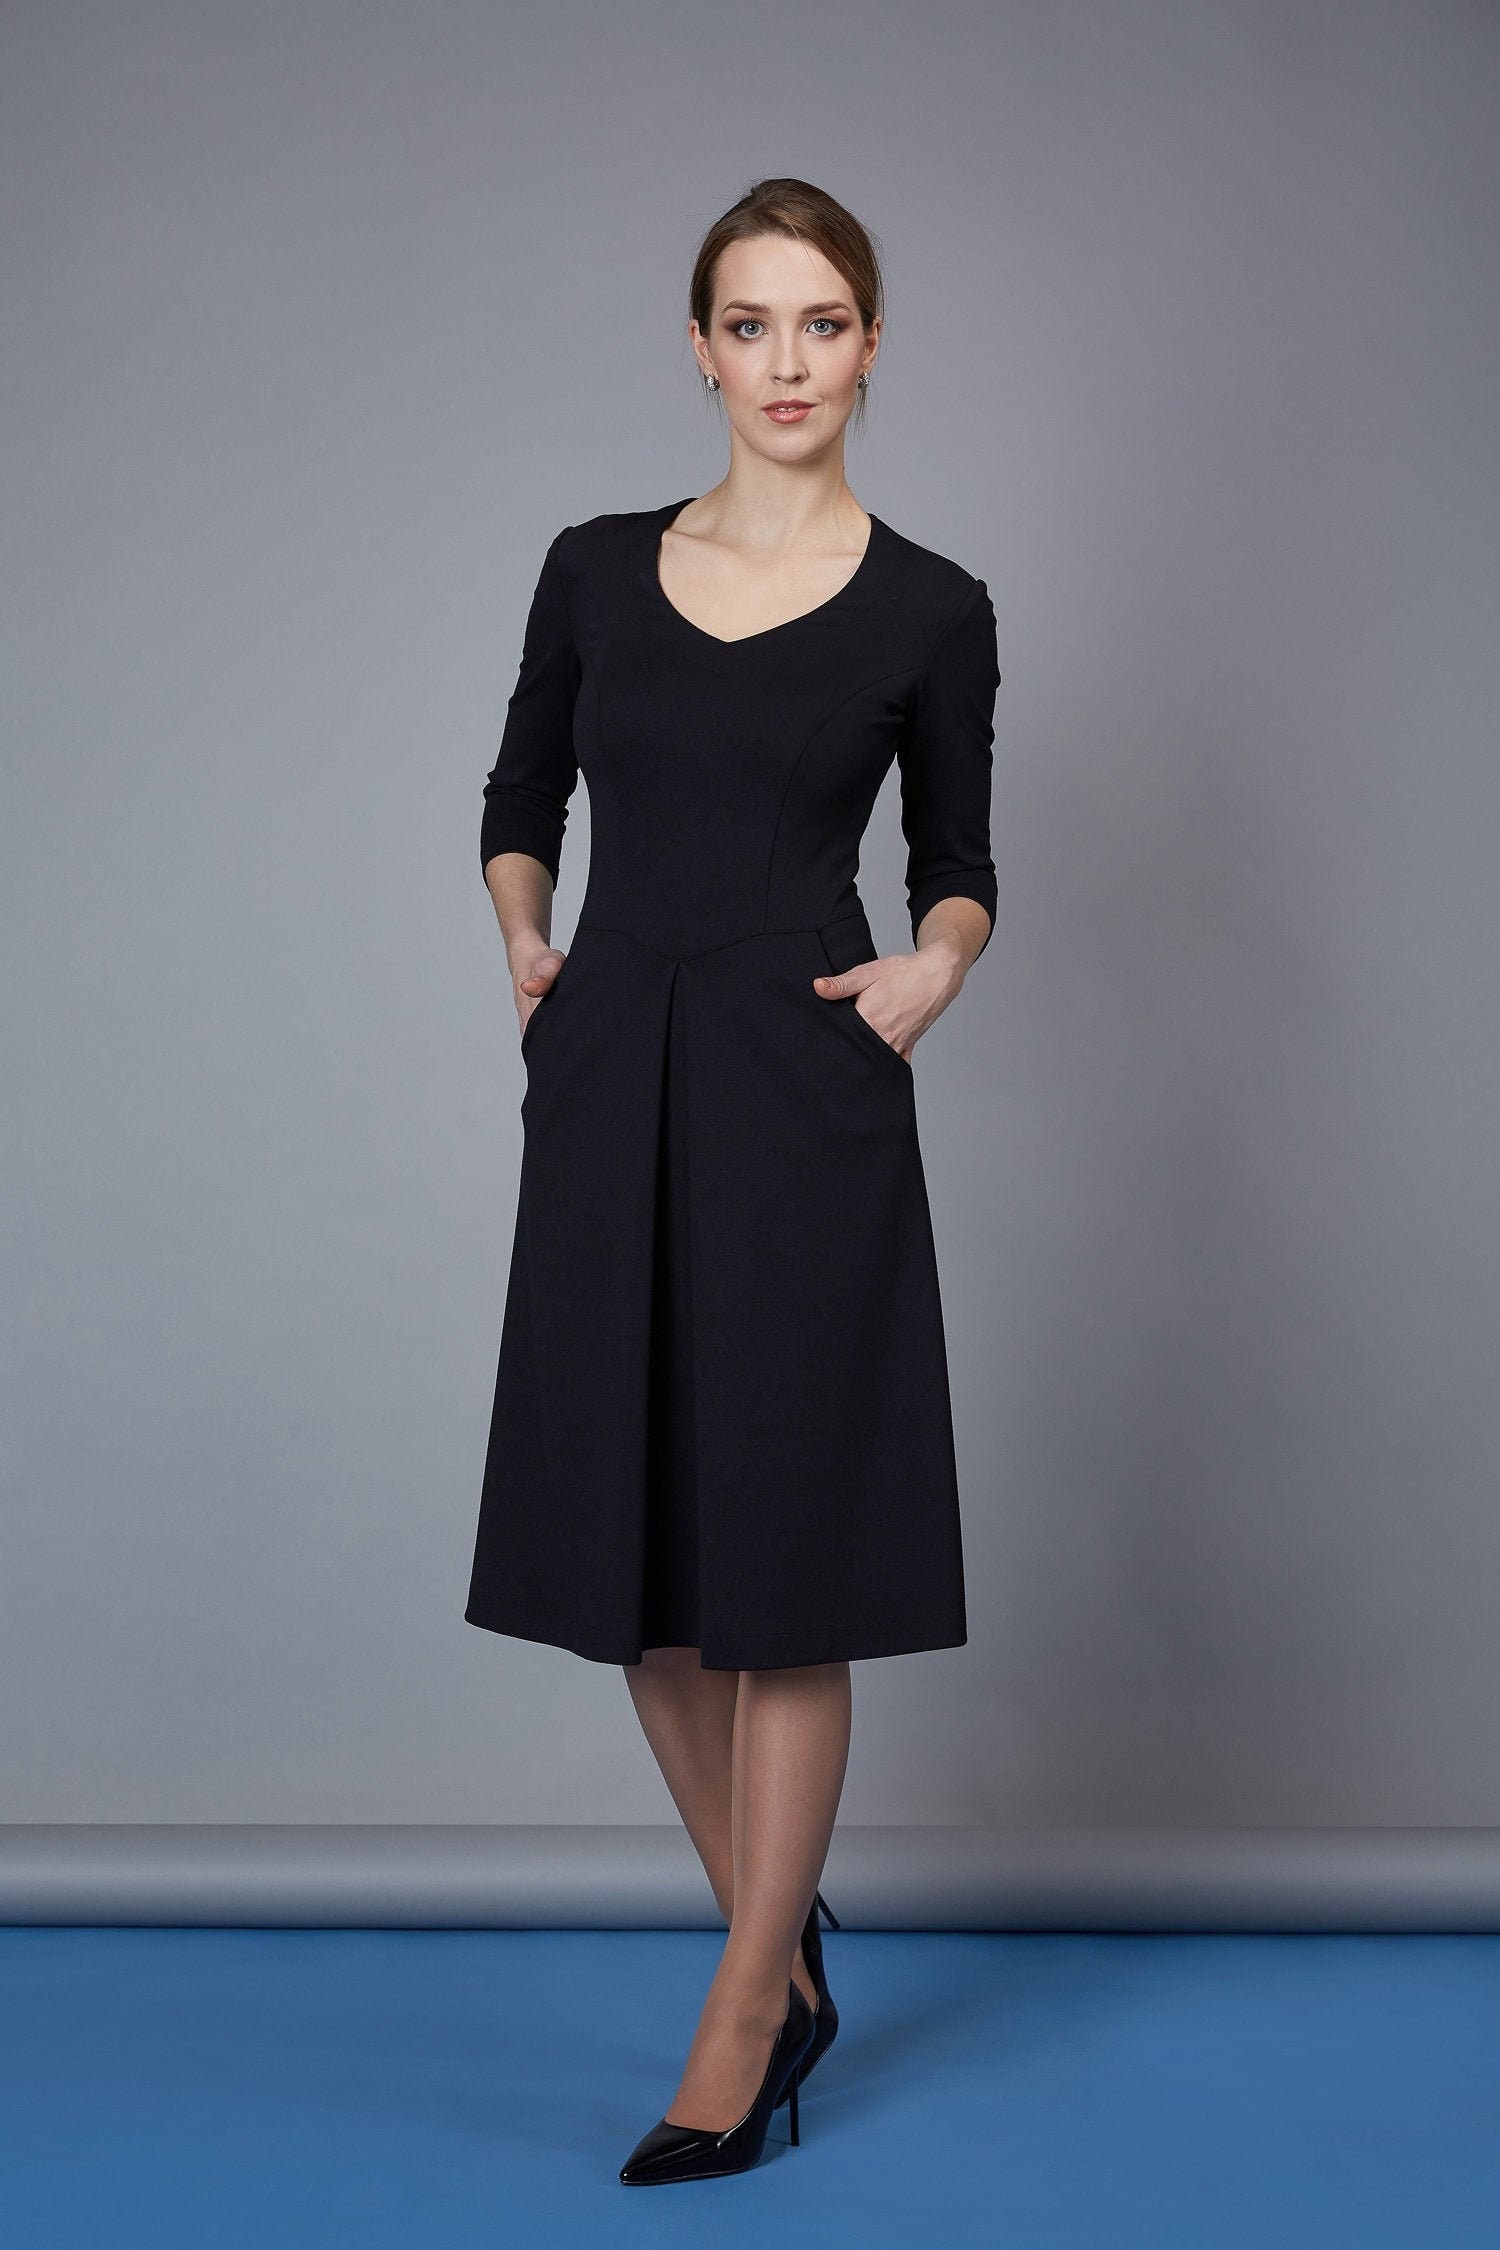 Wear // rewear: A transitional season dress by Amour Vert